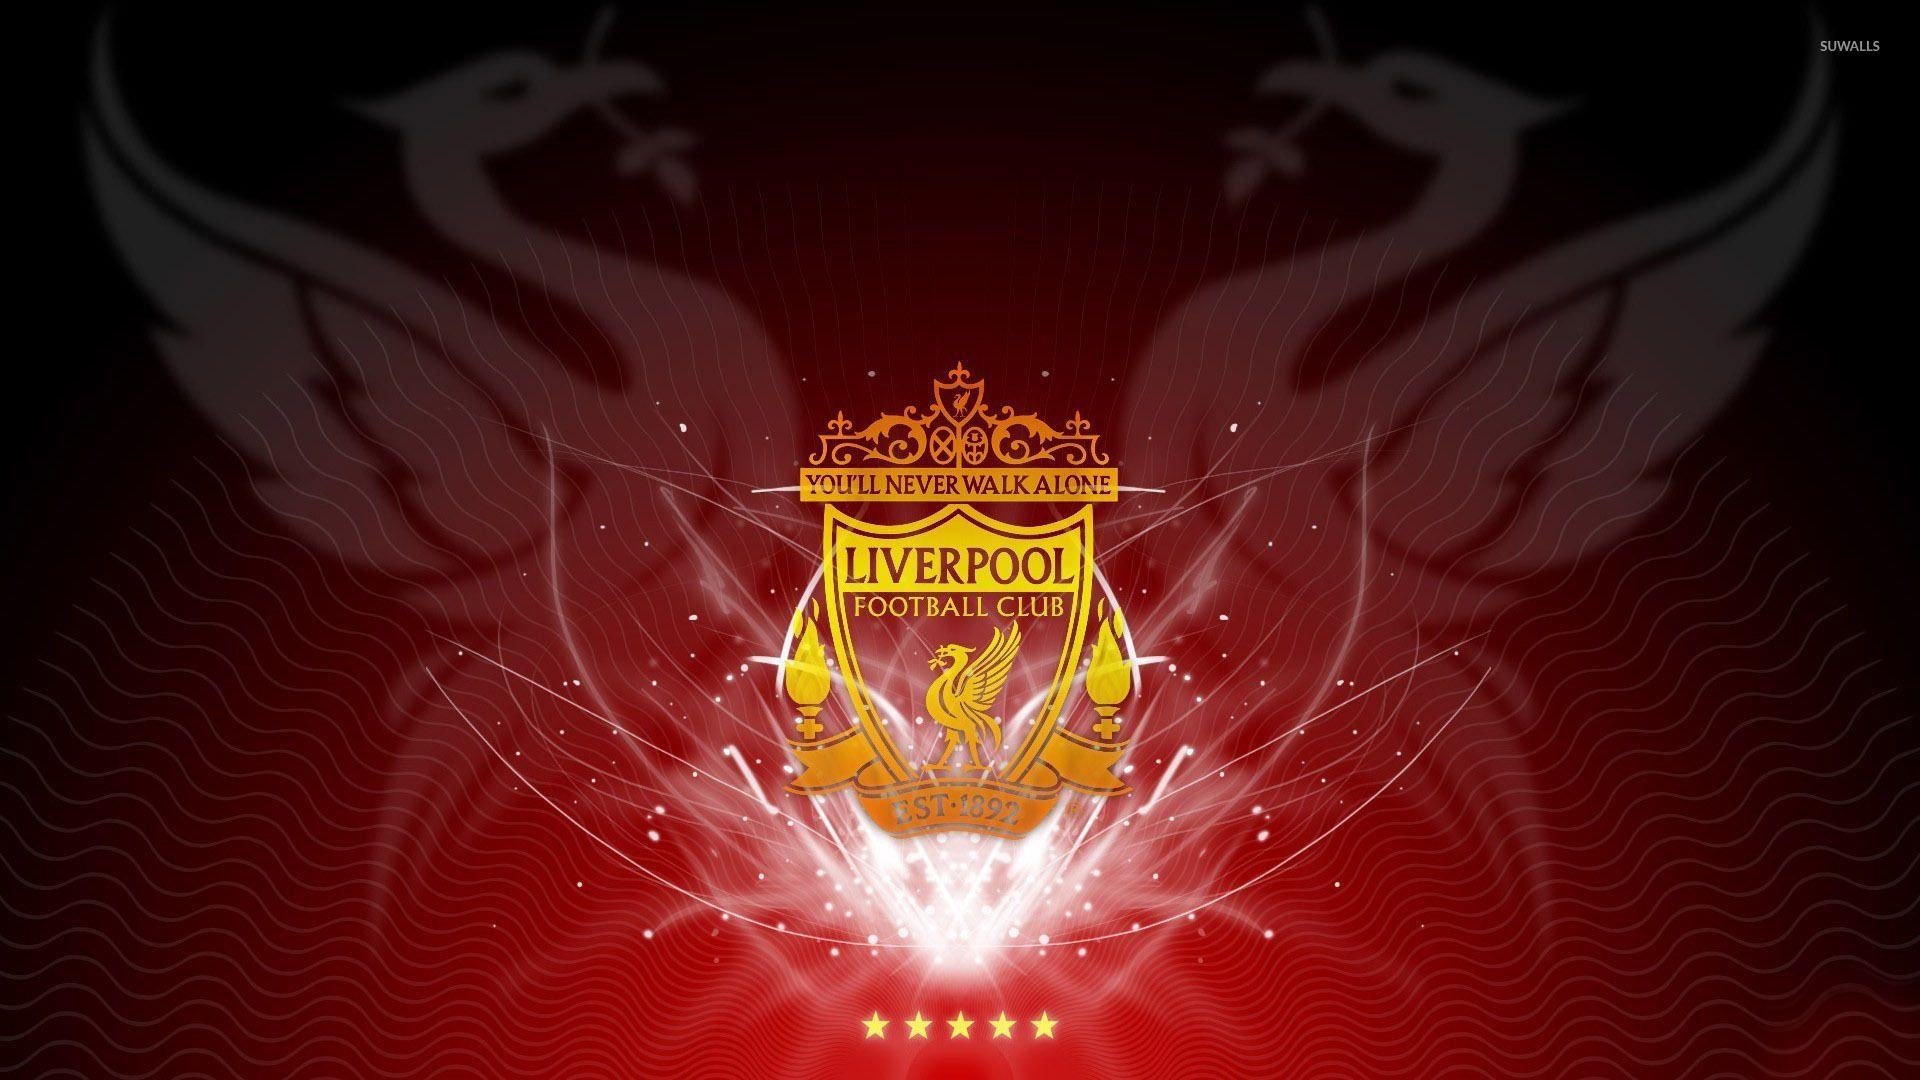 Liverpool Football Club [3] wallpaper wallpaper